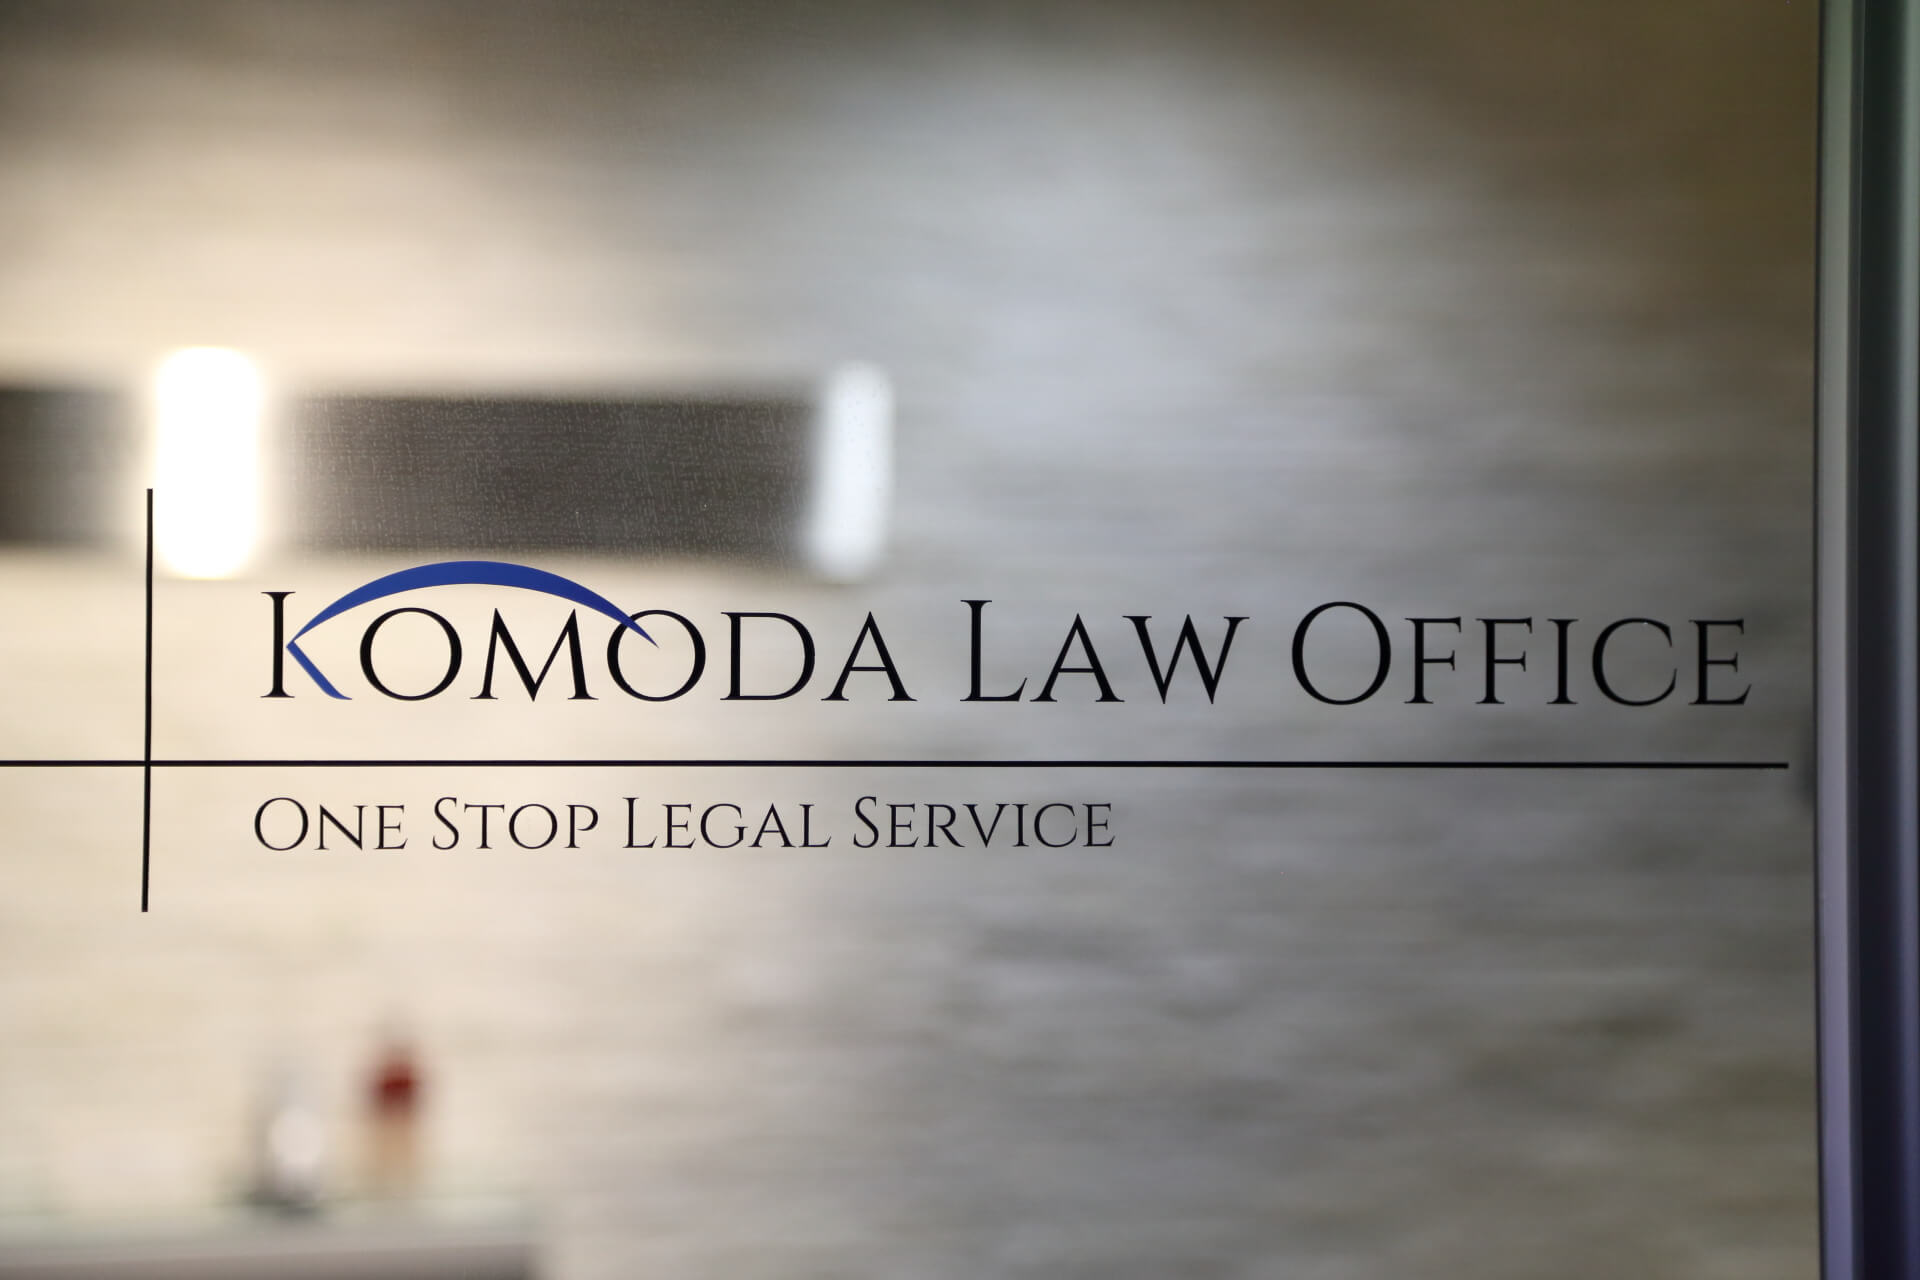 KOMODA LAW OFFICE